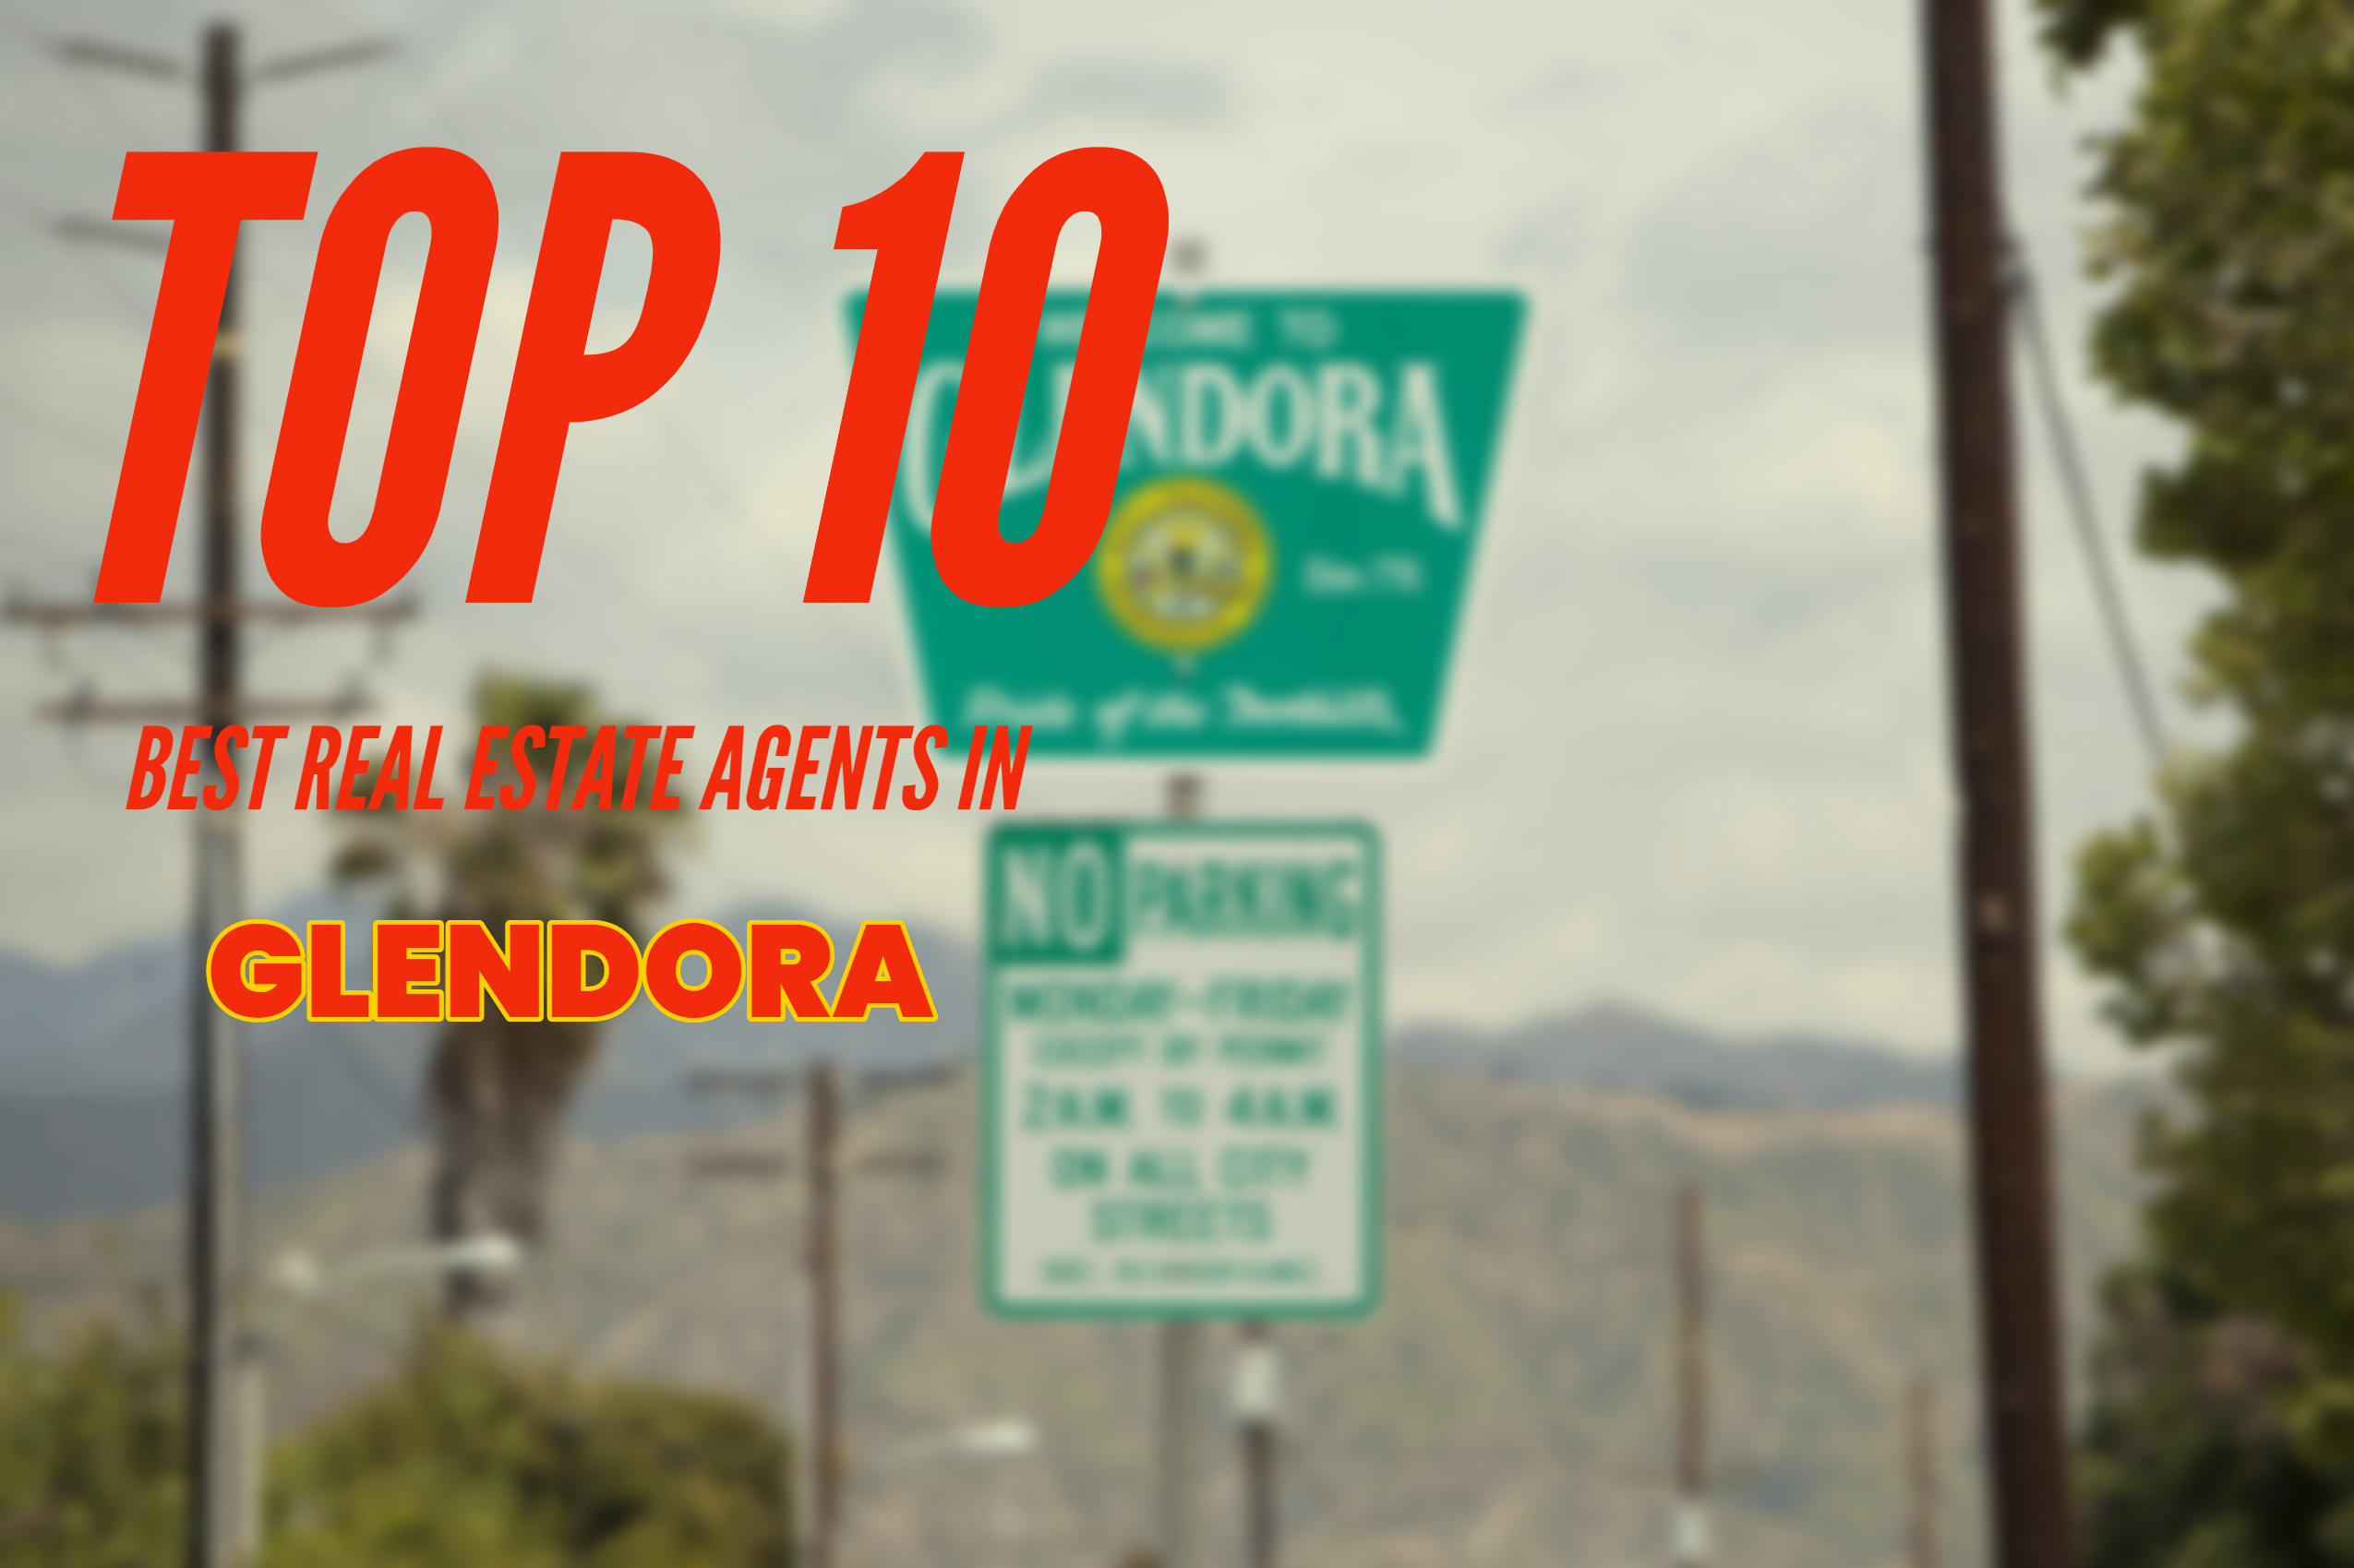 TOP 10 Real Estate Agents in Glendora